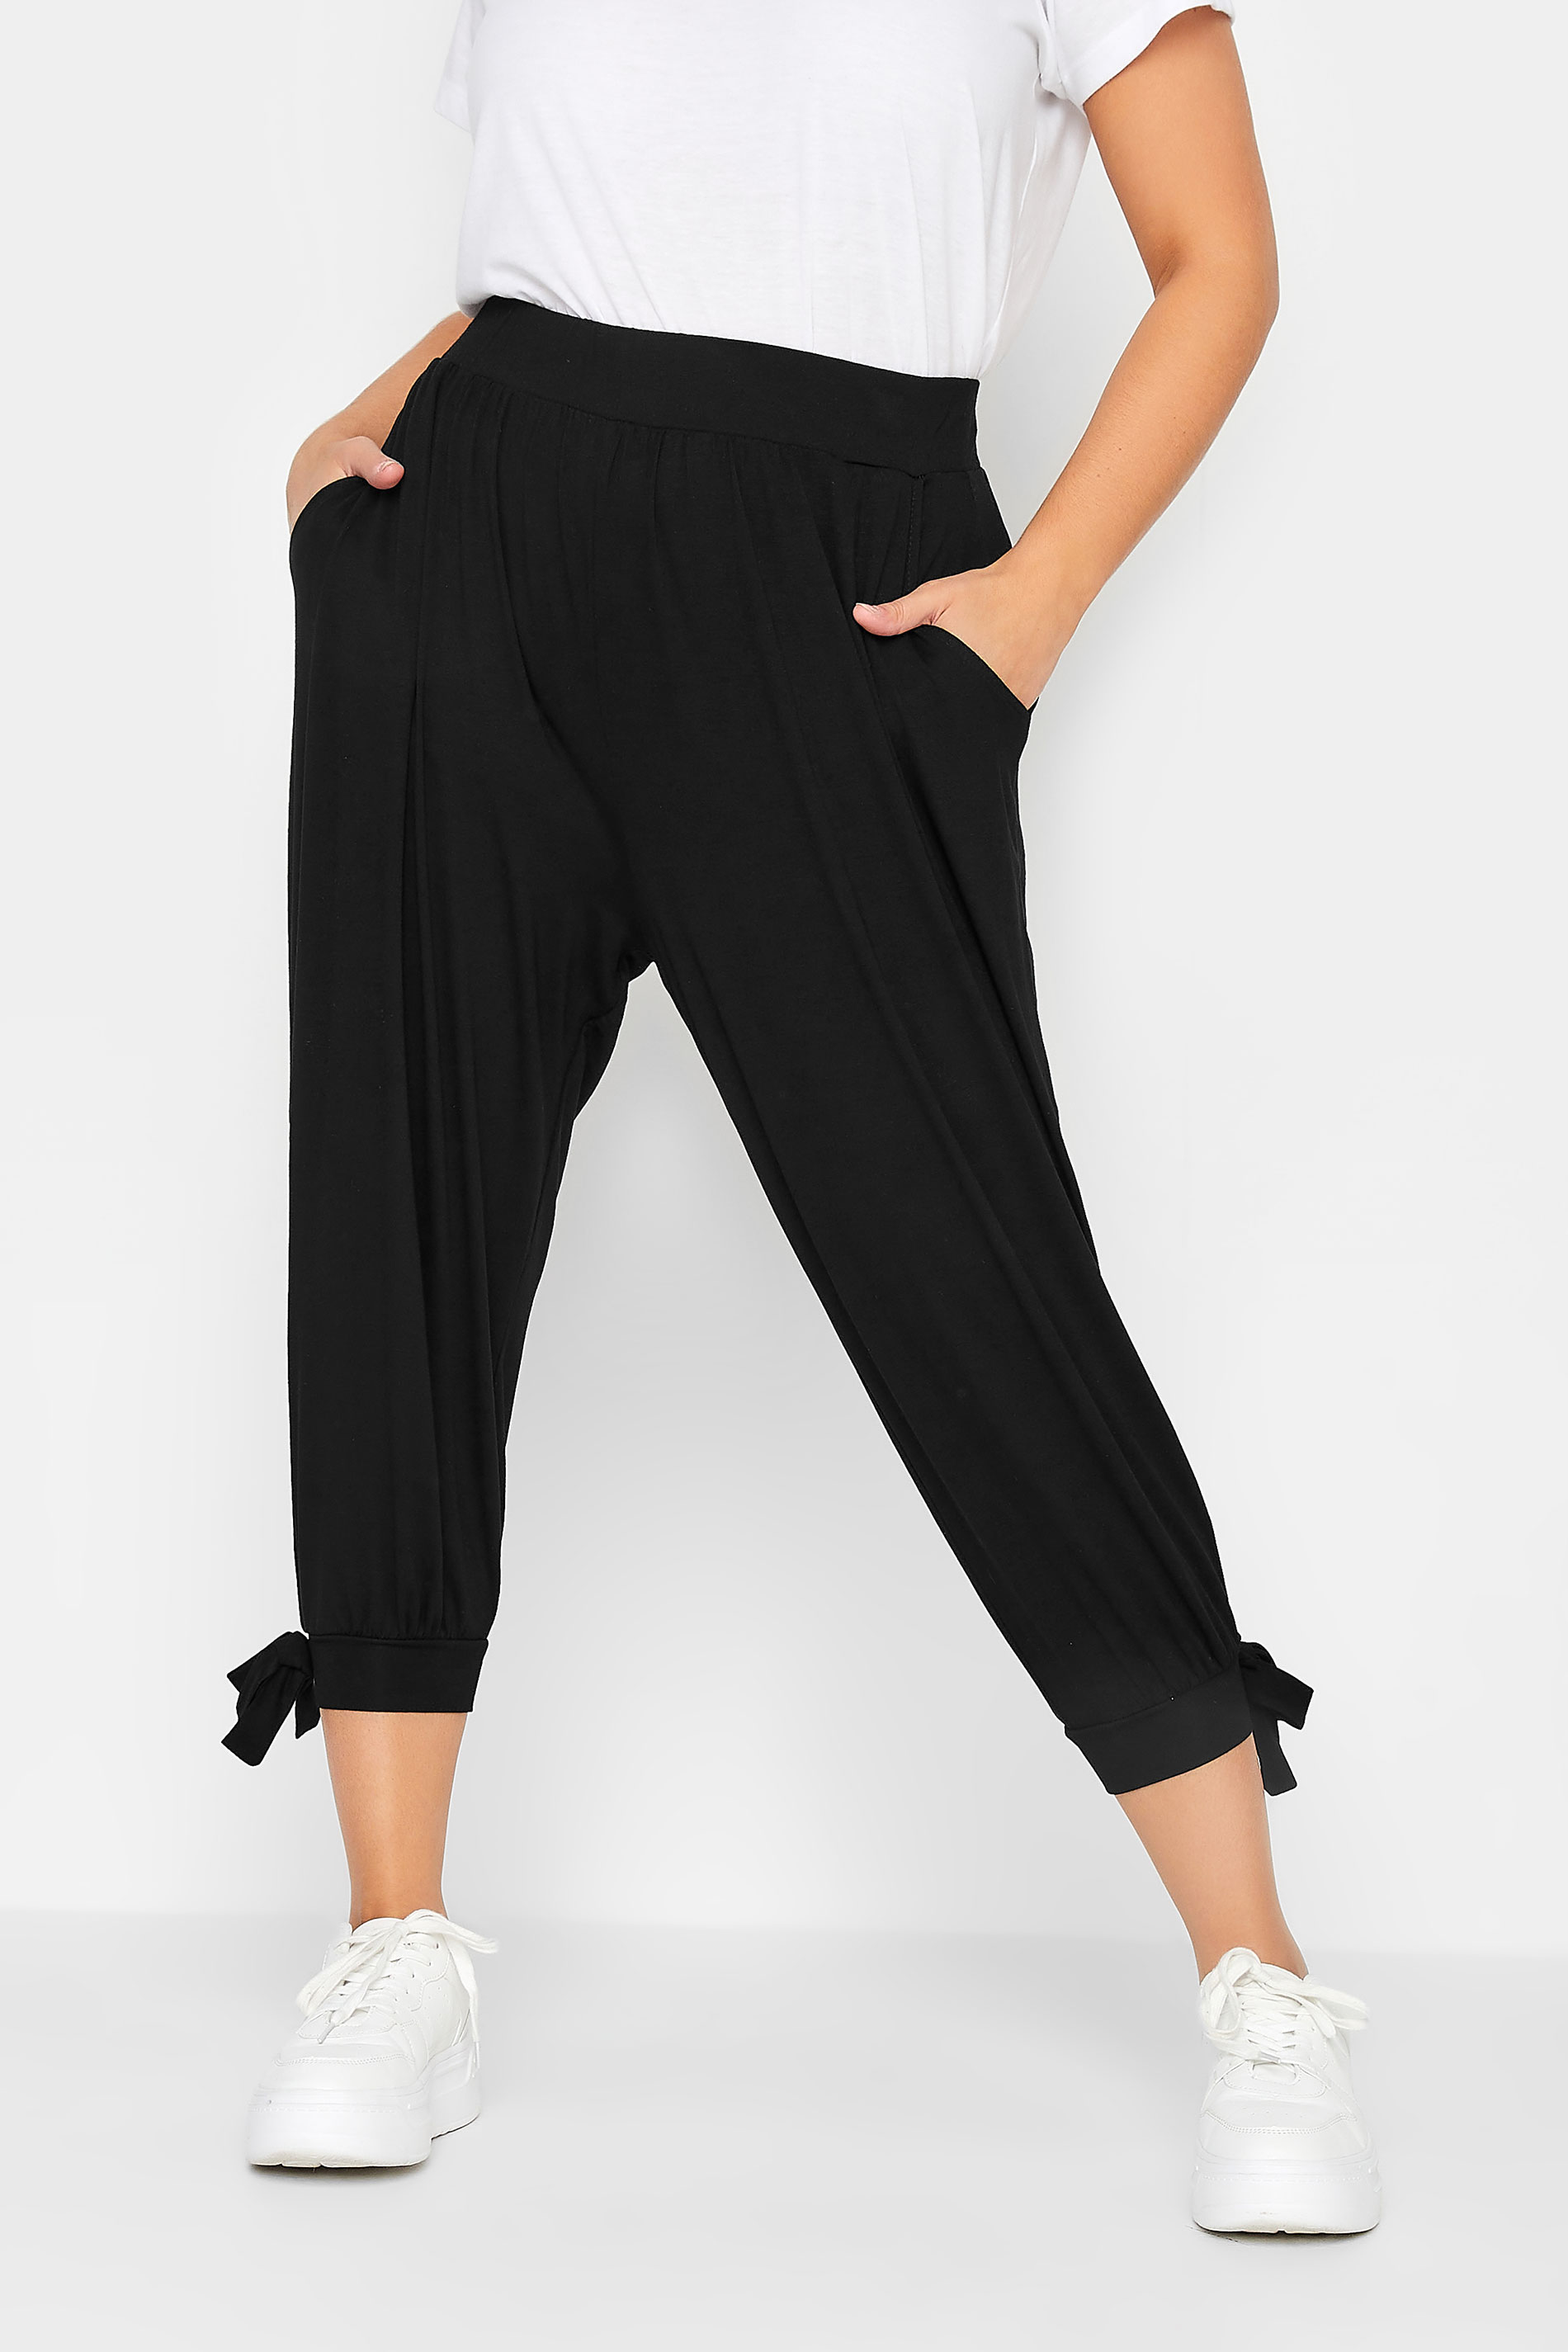 Buy Men's Harem Pants Pack of 2| Blue & Black Stripes | Fits Waist Size 28  to 36 inches Online on Brown Living | Mens Pyjama